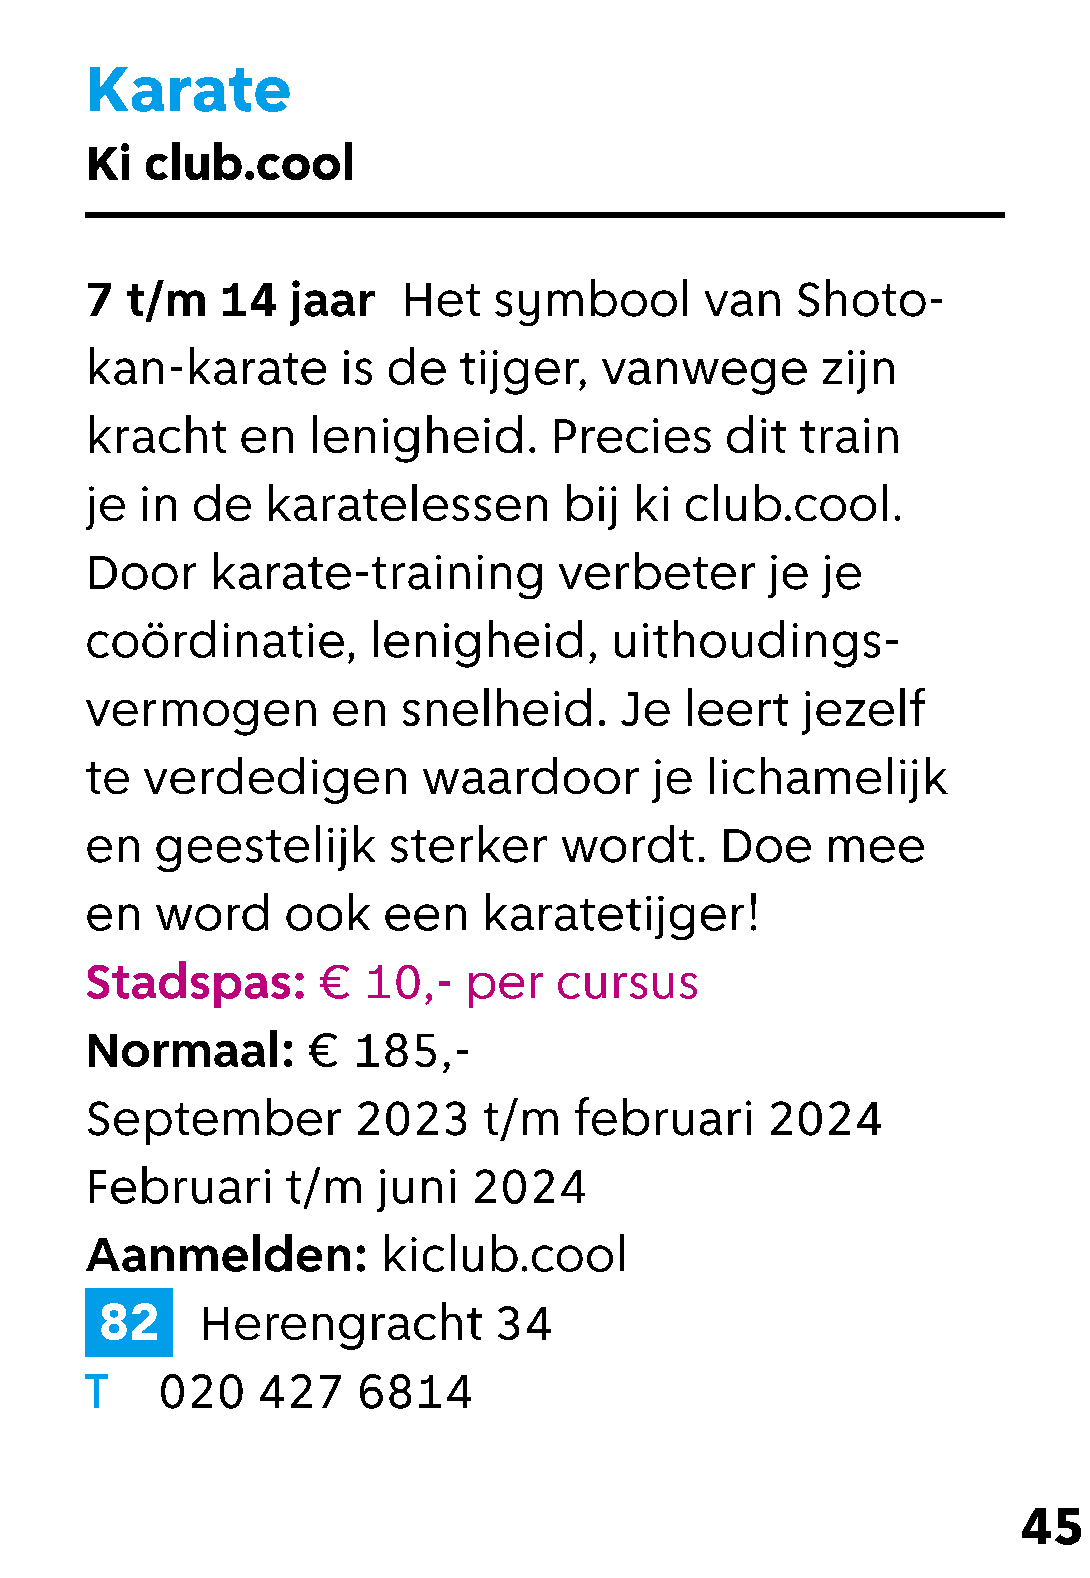 Karate school ki club cool joins Gemeente Amsterdam Stadspas Kidsgids project-coolest club in town-karate-amsterdam-karate-waterland-monnickendam-kidsgids-ki-clubcool